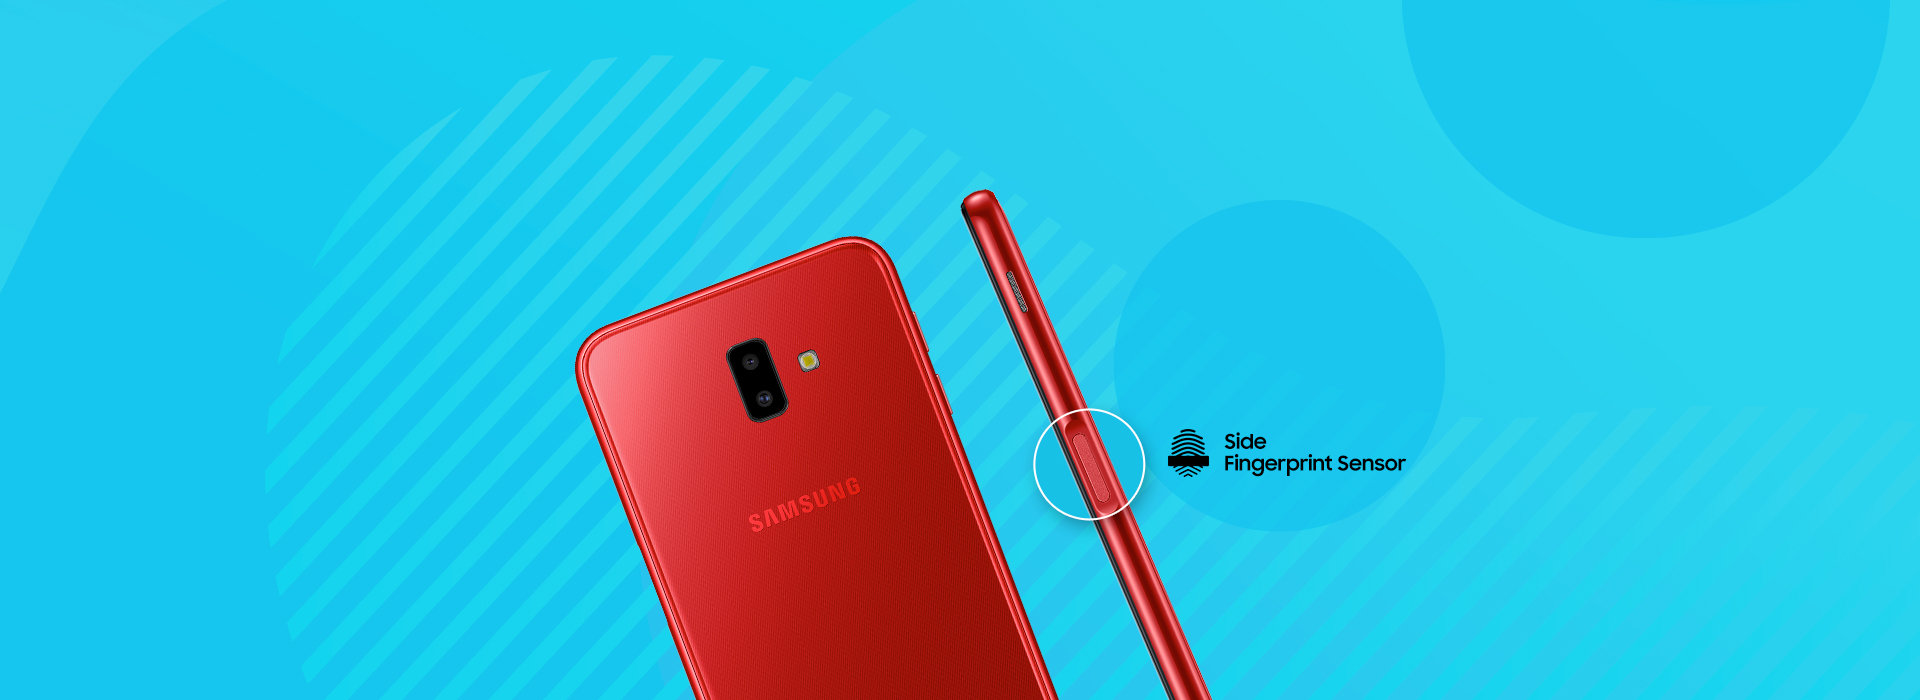 Samsung Galaxy J6 Plus Side Fingerprint